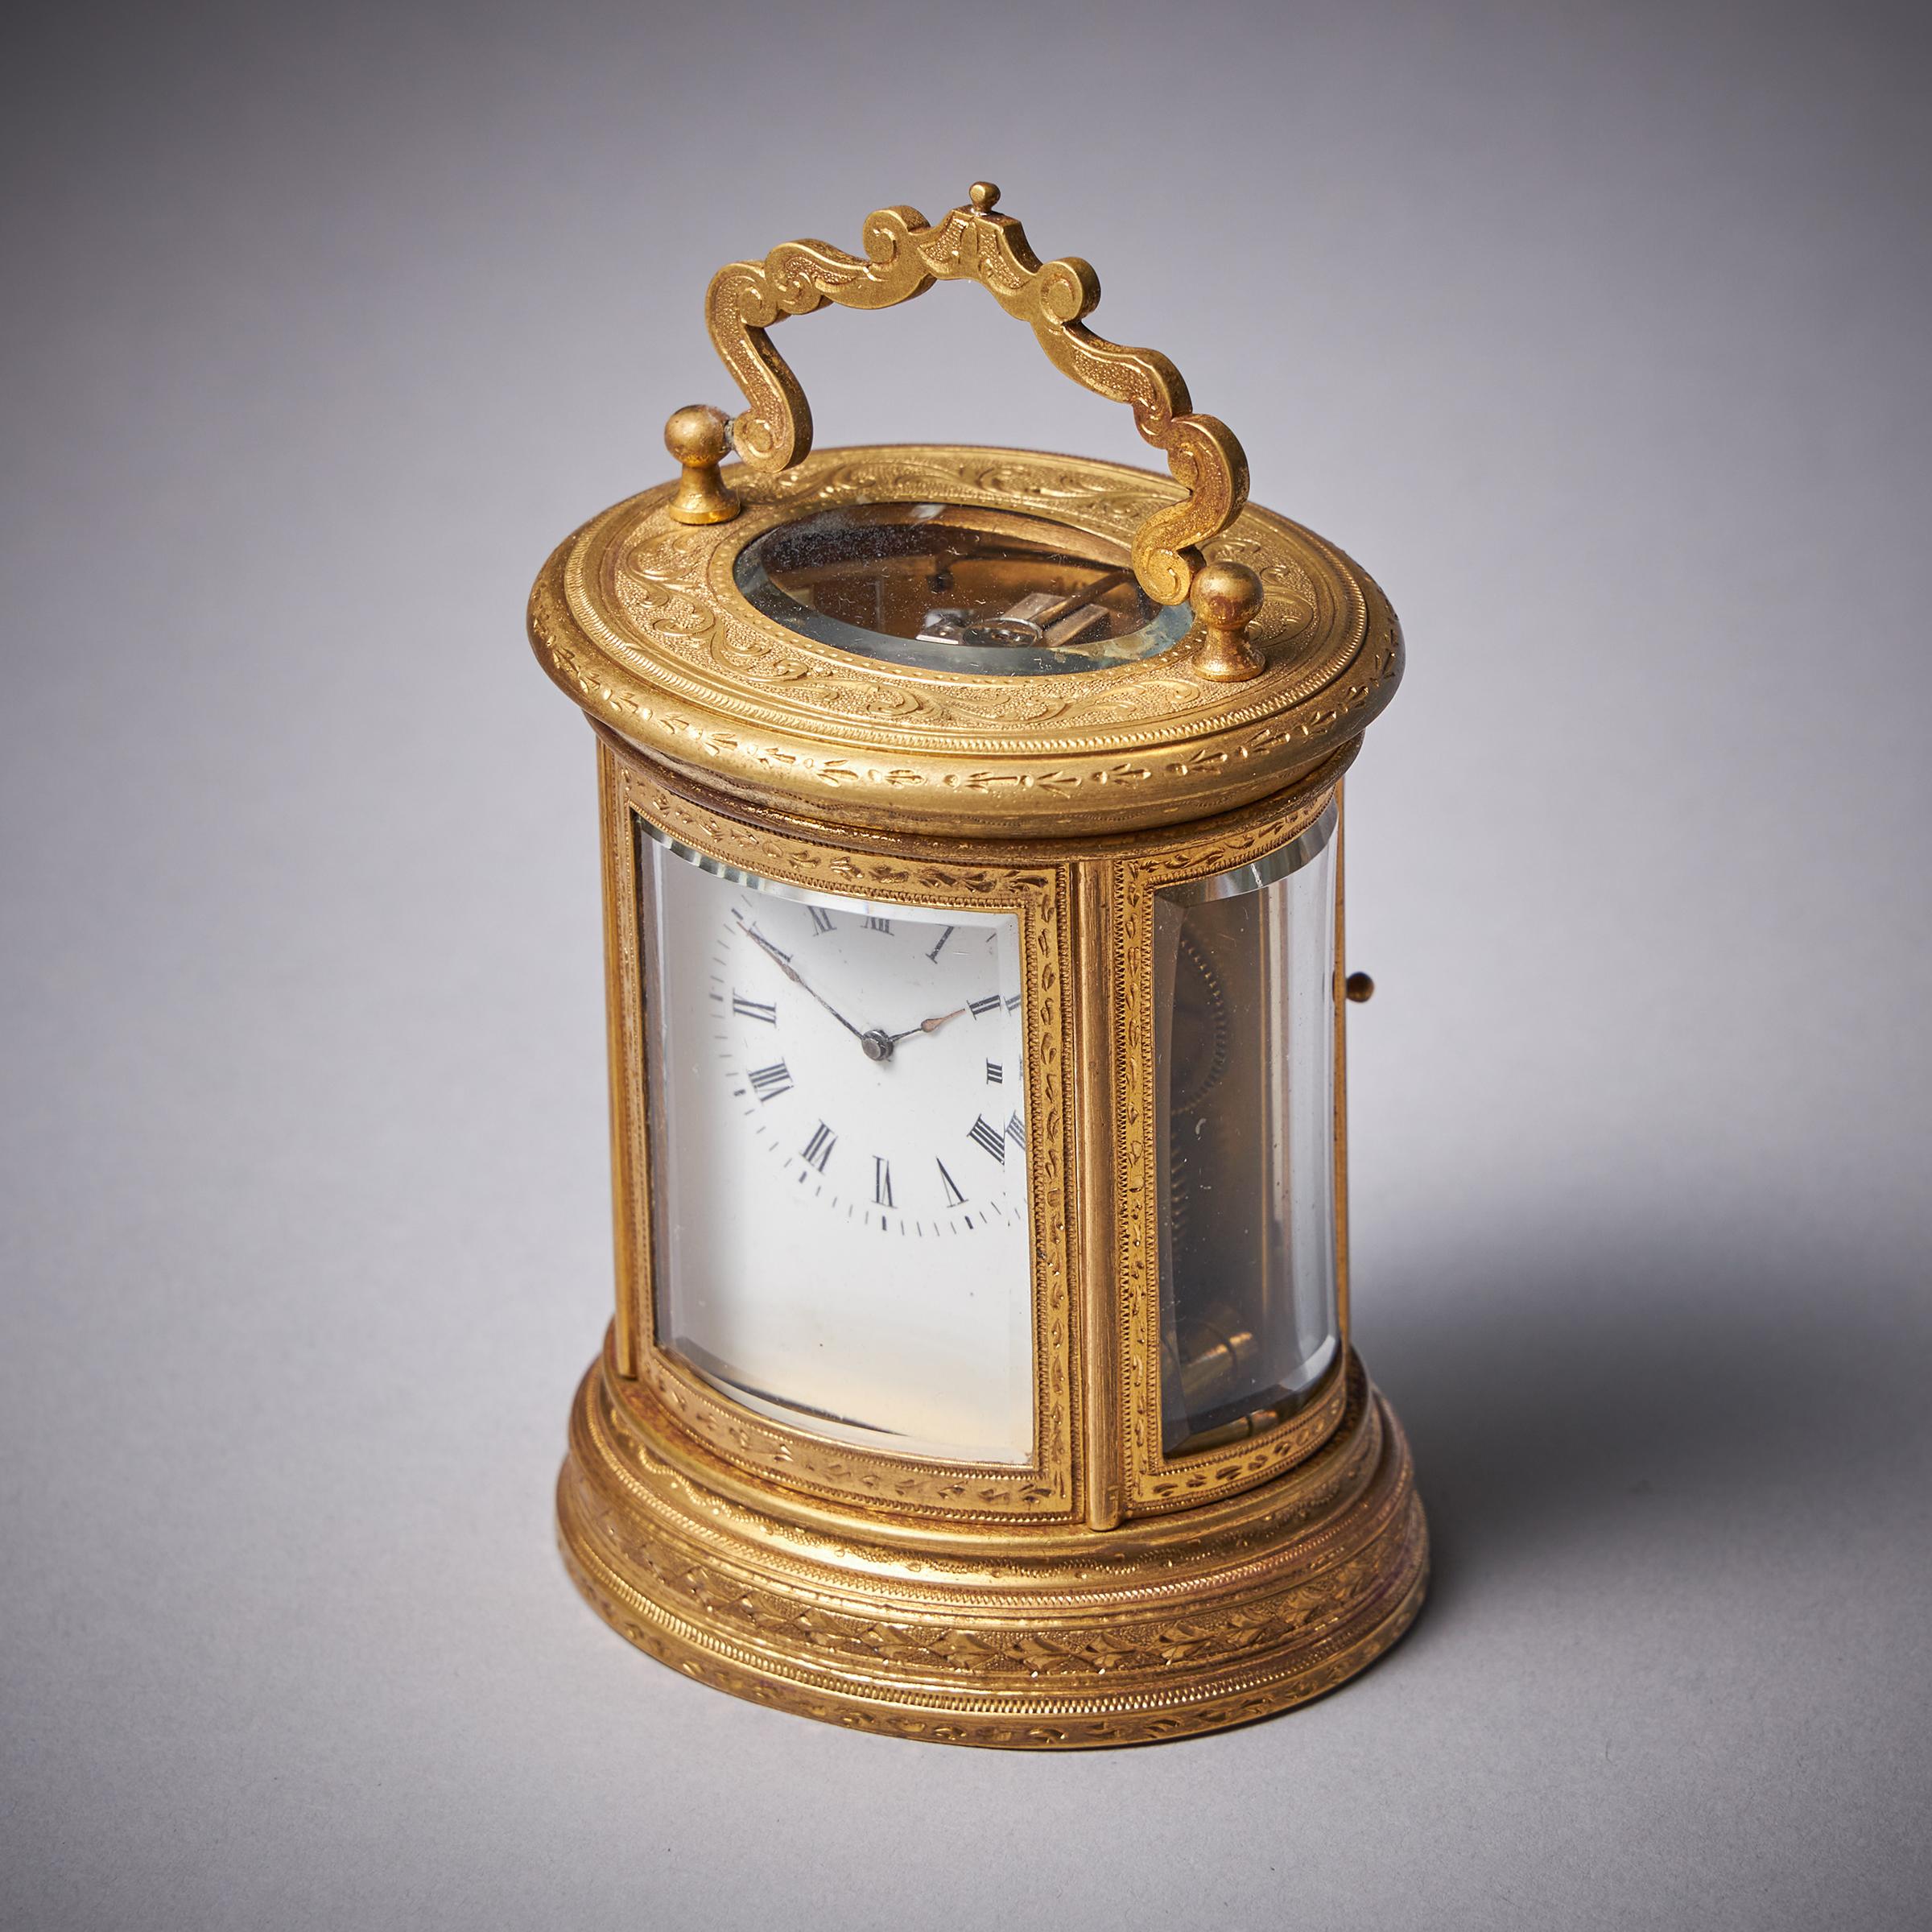 Eight-Day Miniature Gilt-Brass Carriage Clock with Original Case